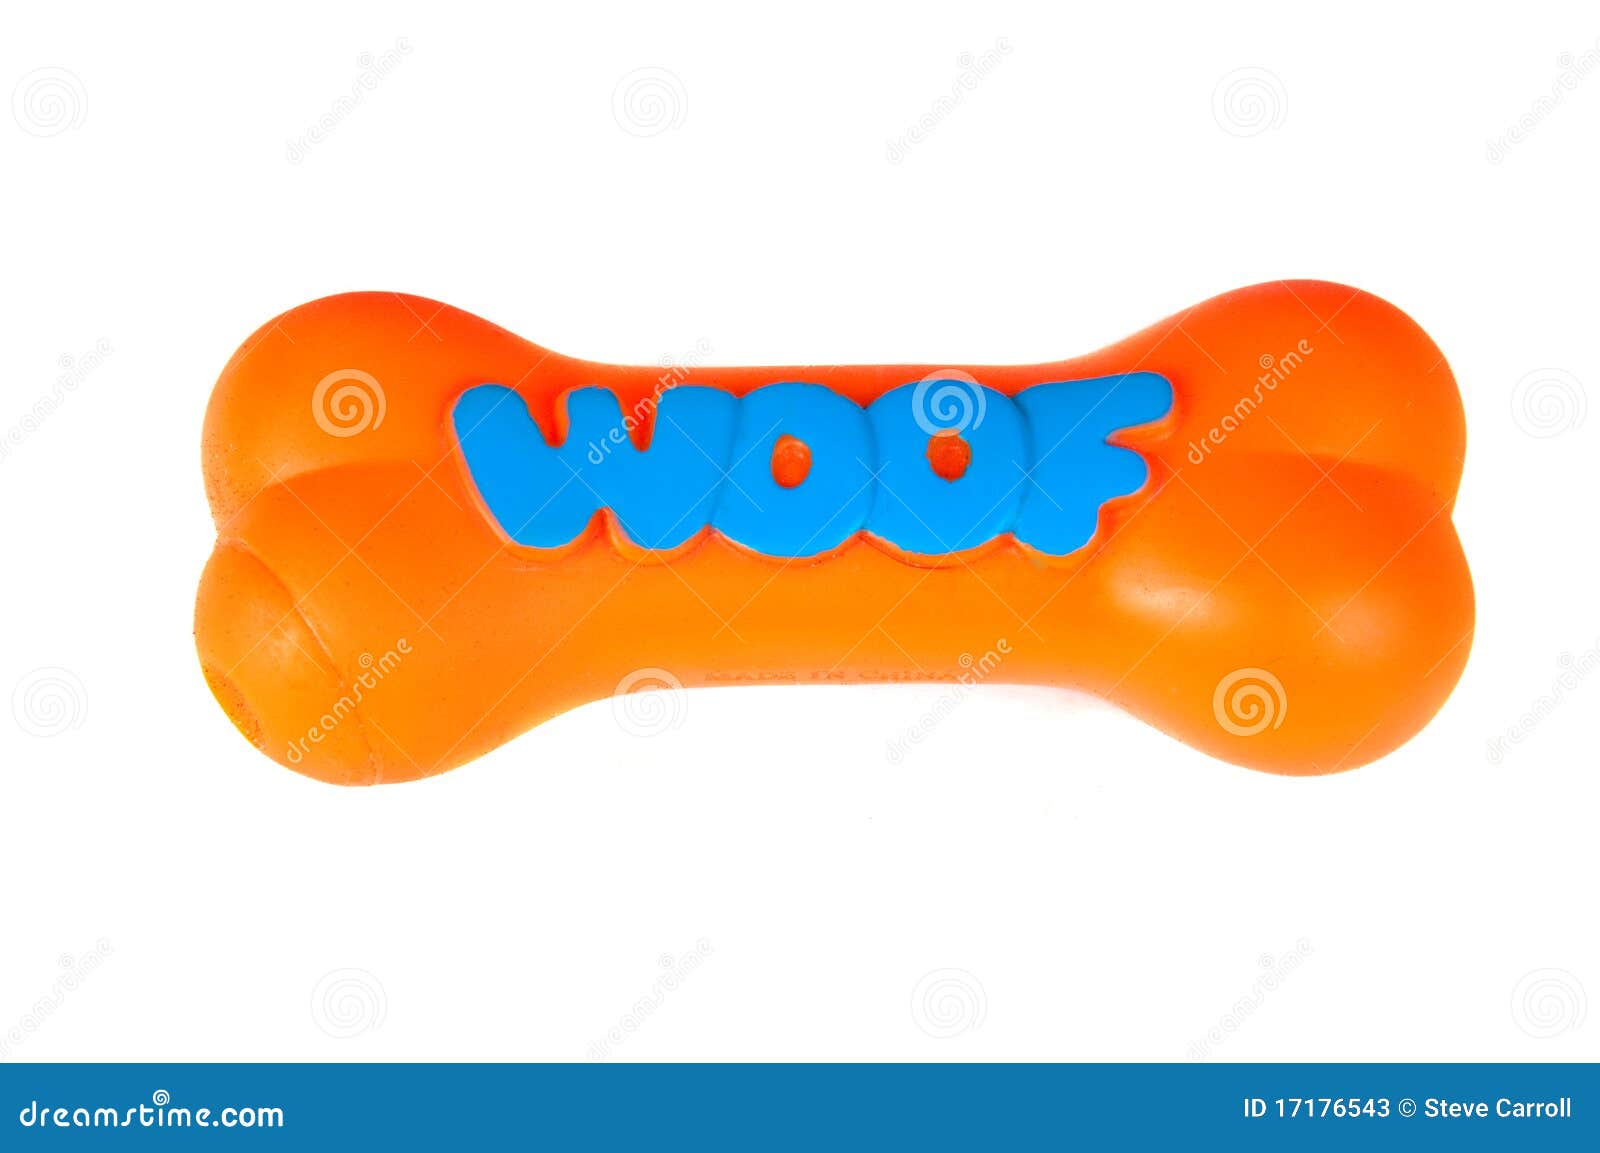 orange plasgtic dog chew toy,  on white